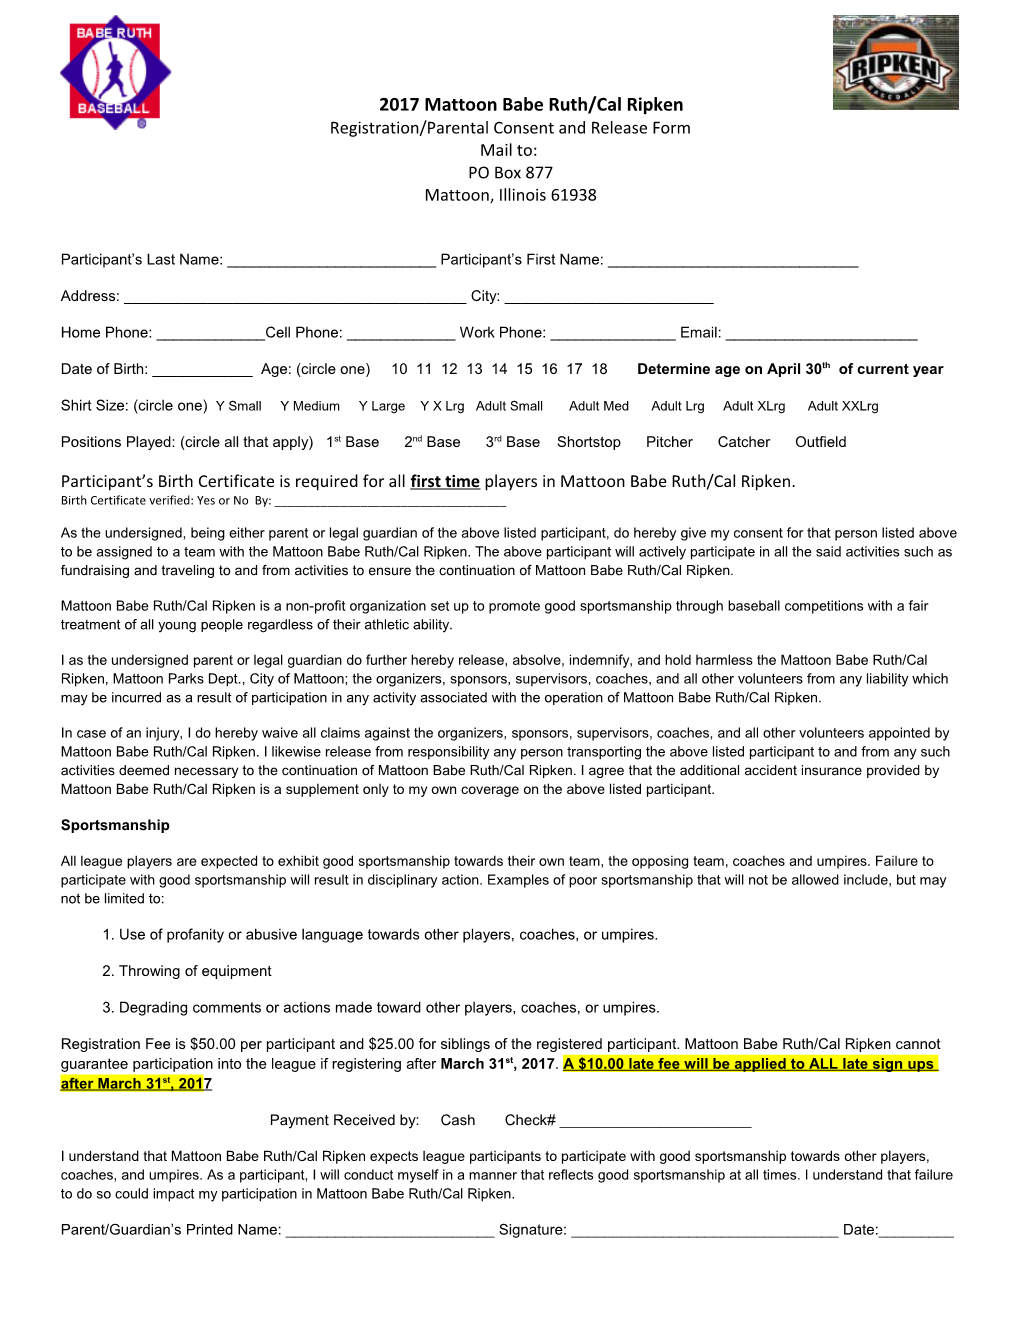 Registration/Parental Consent and Release Form